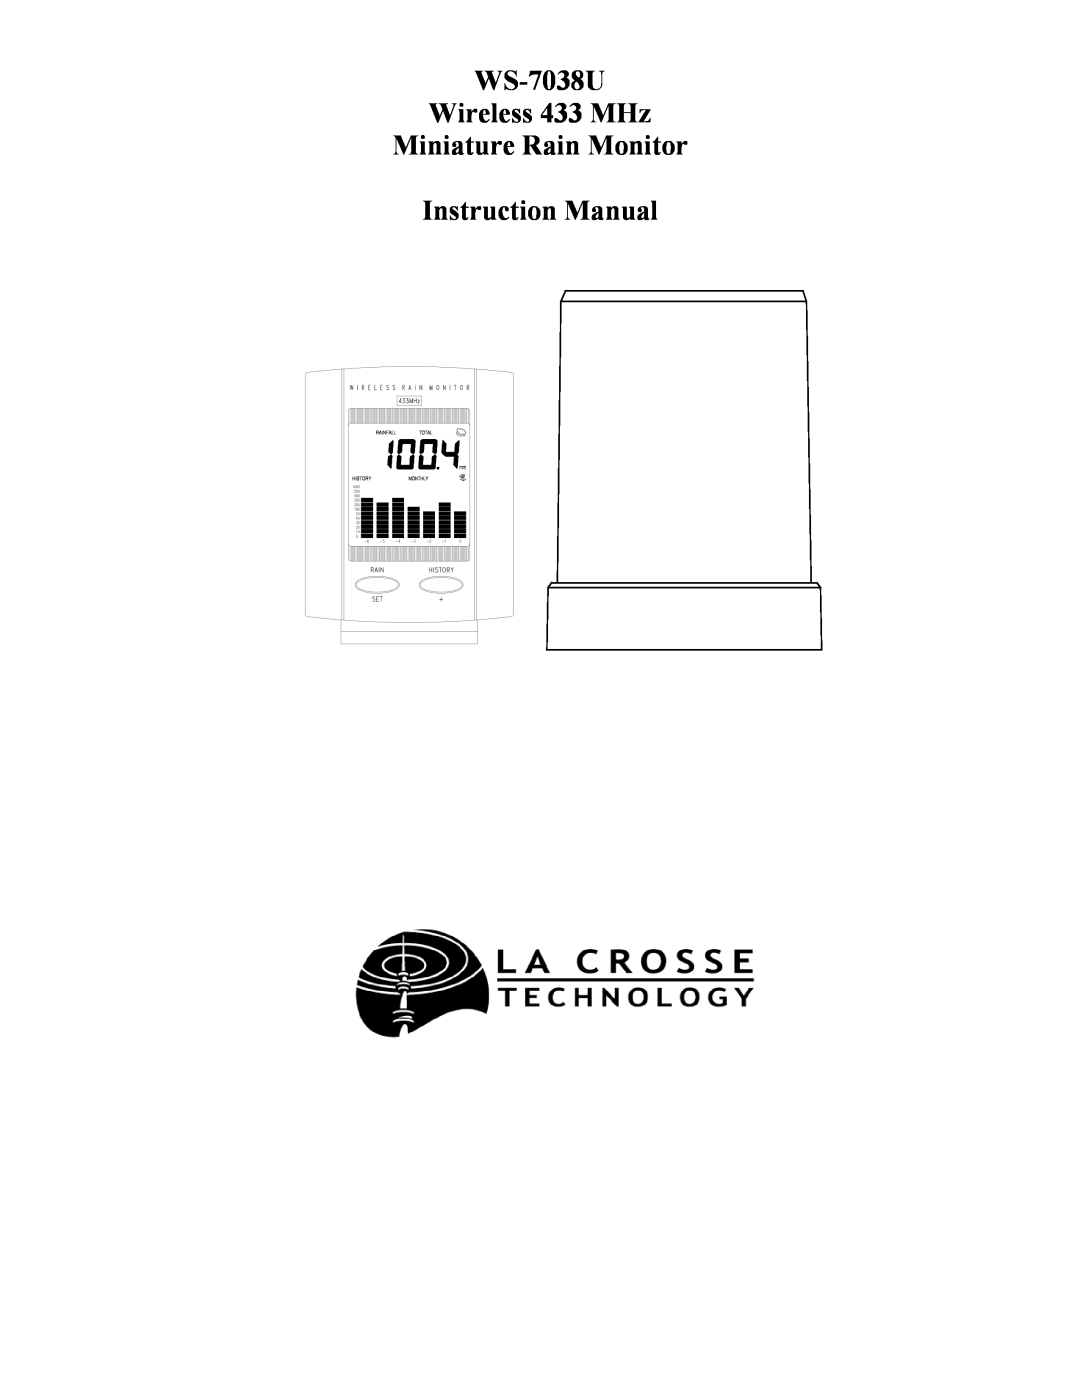 La Crosse Technology WS-7038U instruction manual 